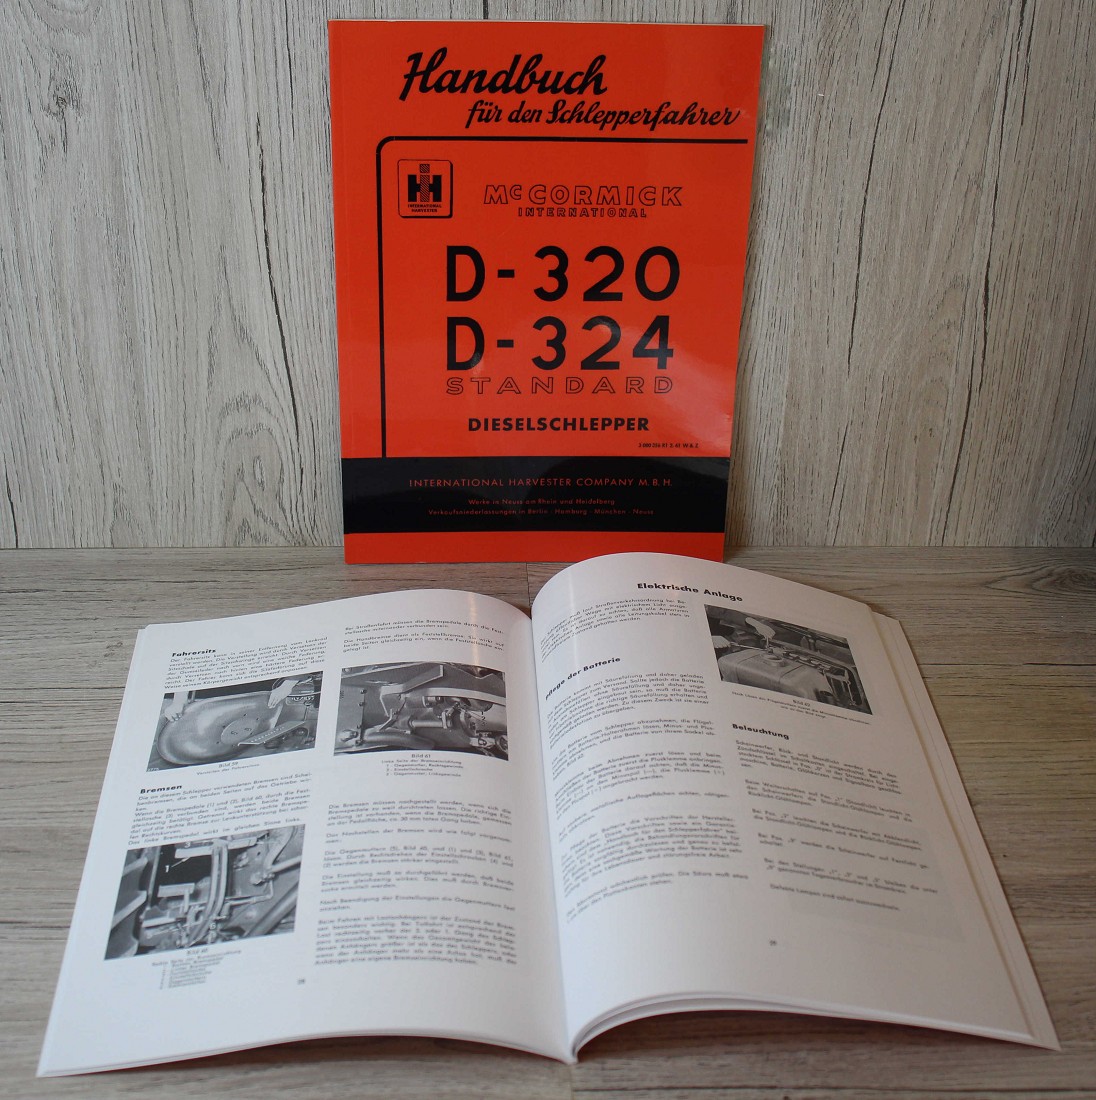 McCormic Handbuch für den Schlepperfahrer D-320 Farmall Bedienungsanleitung 